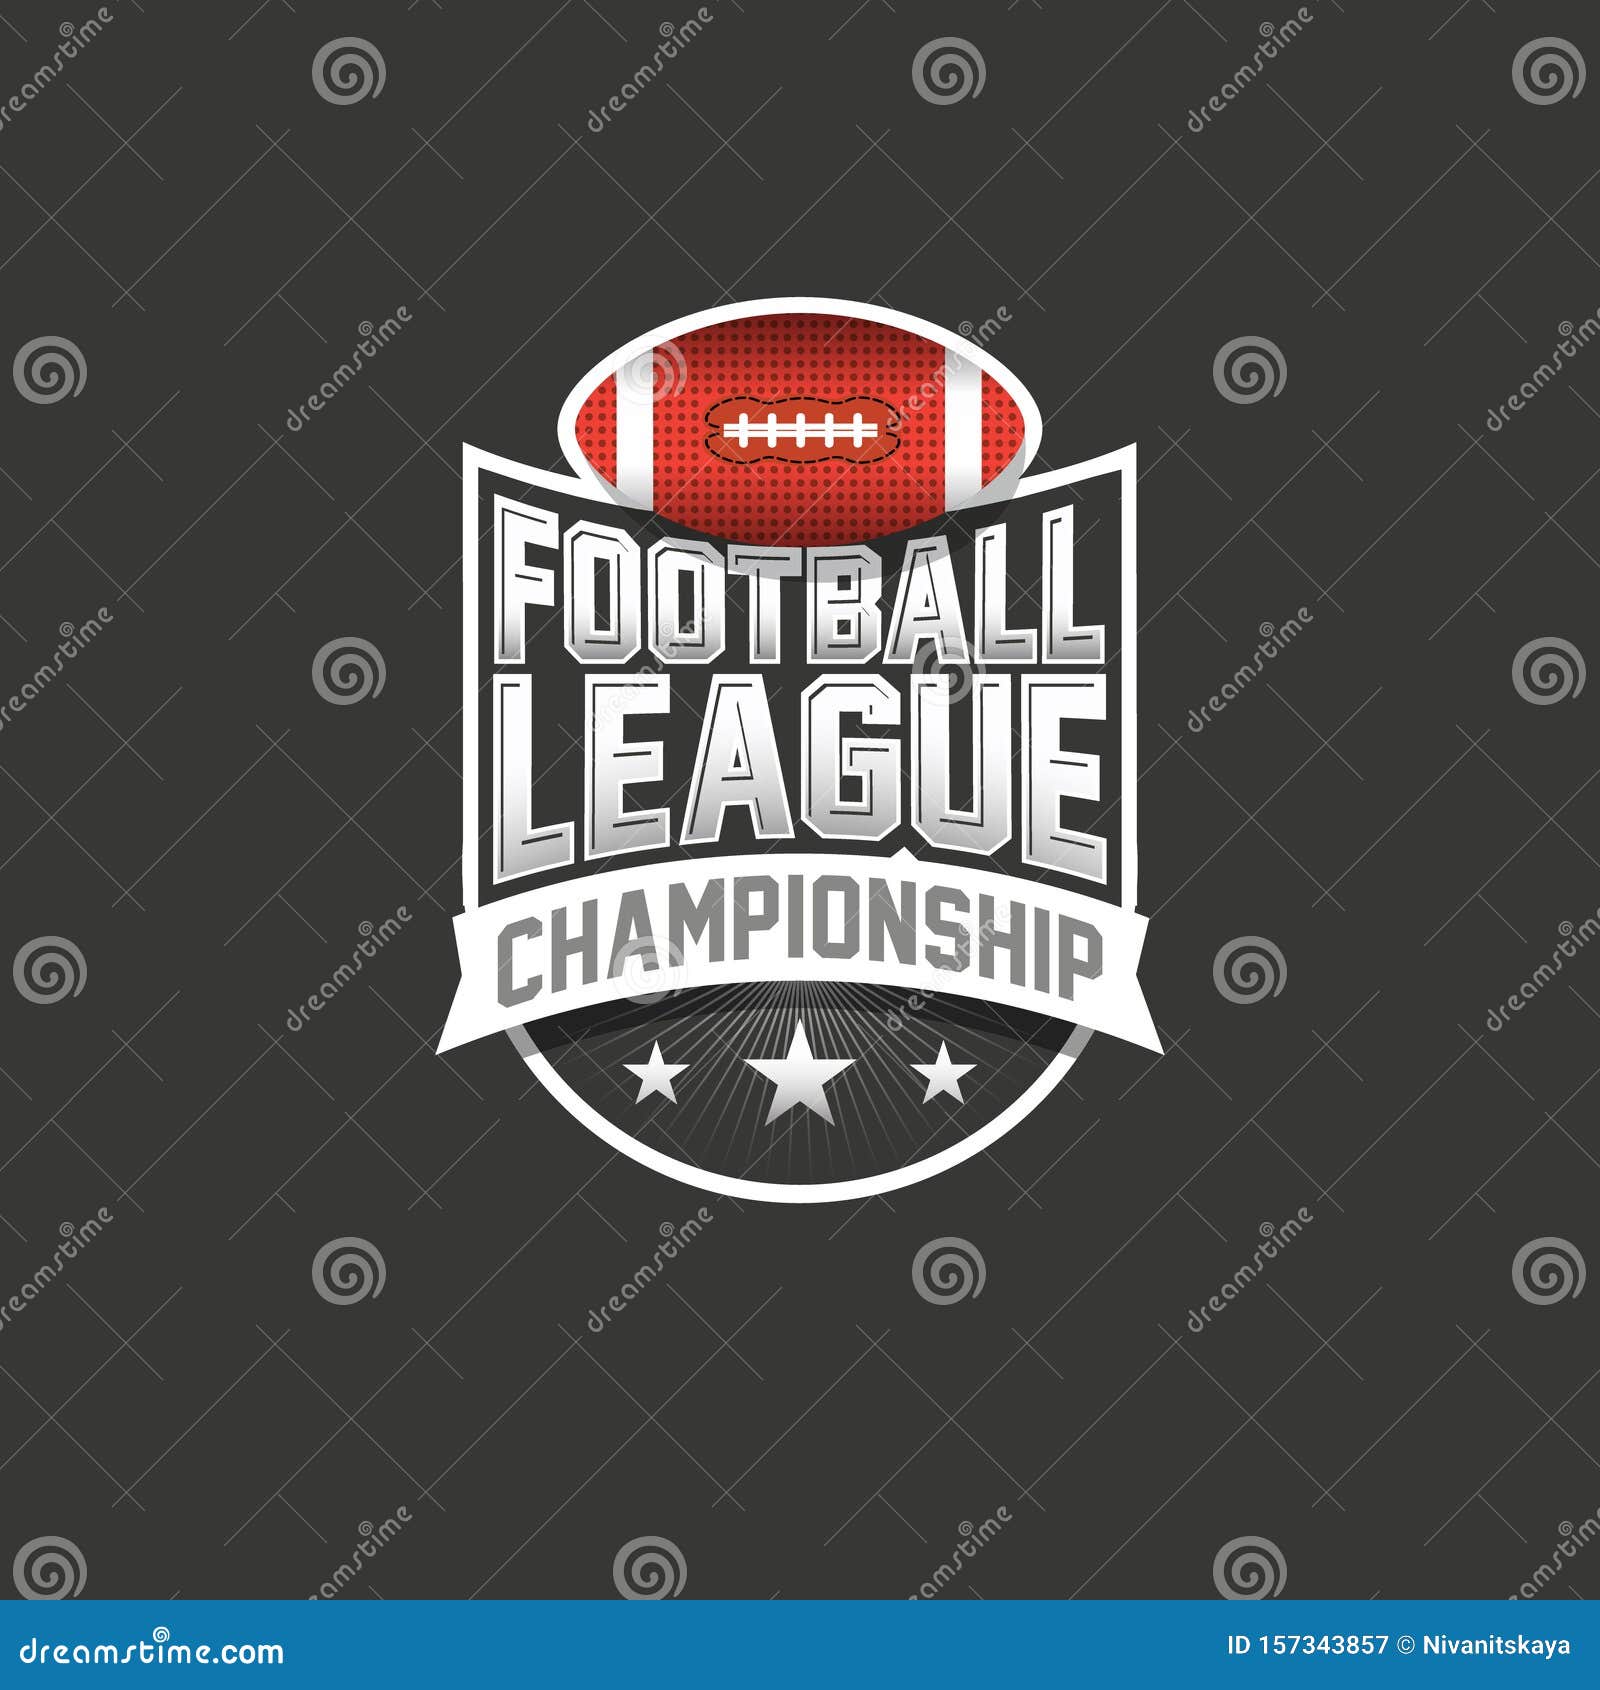 football league championship logo. american football sports emblem.